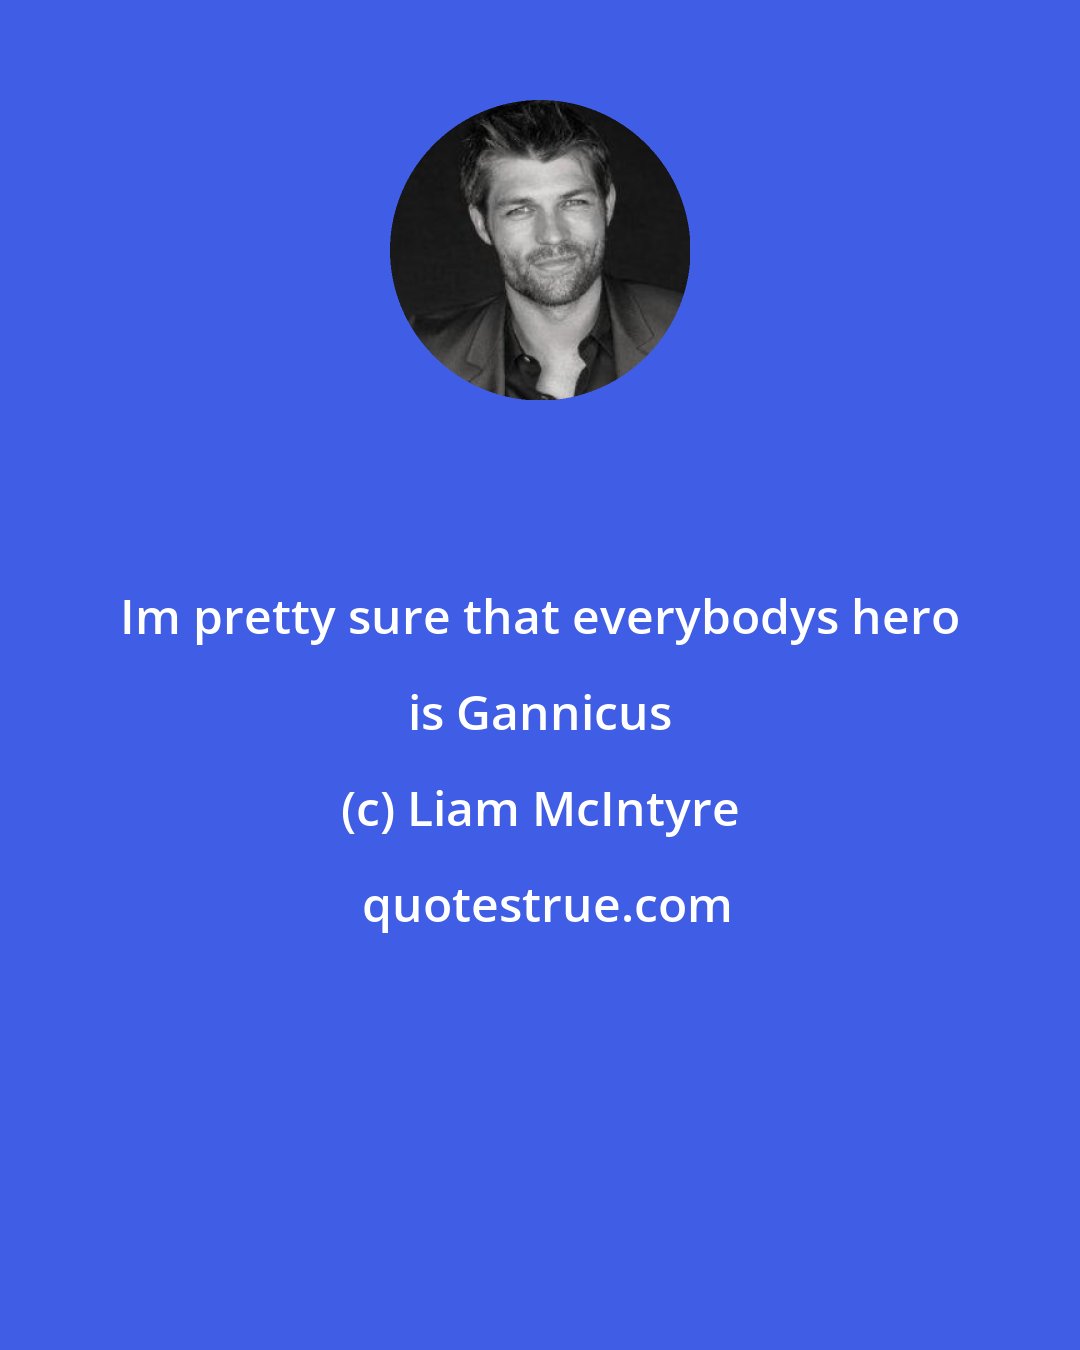 Liam McIntyre: Im pretty sure that everybodys hero is Gannicus